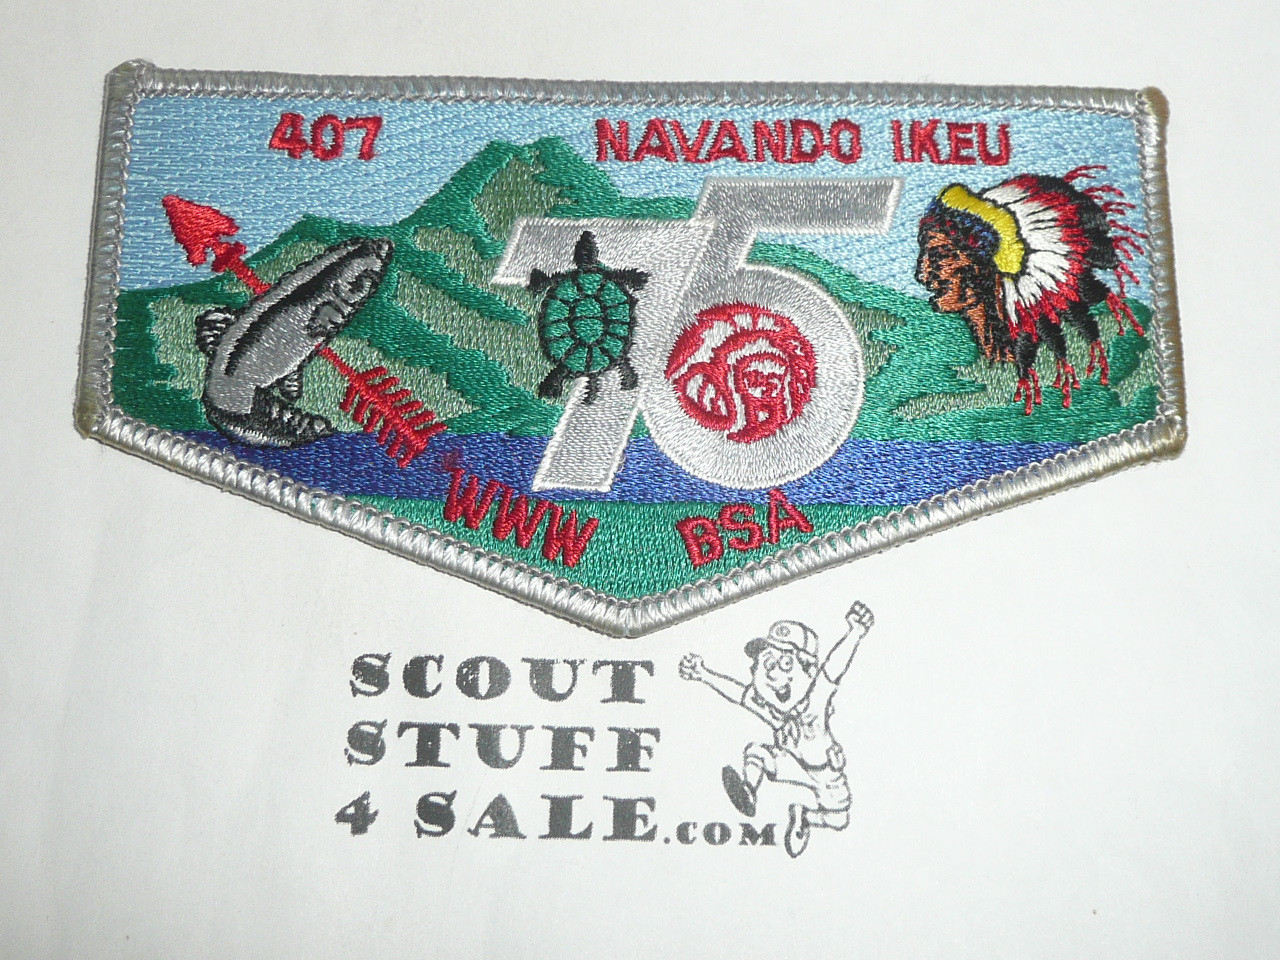 Order of the Arrow Lodge #407 Navando Ikeu s26 OA 75th Anniversary Flap Patch - Boy Scout